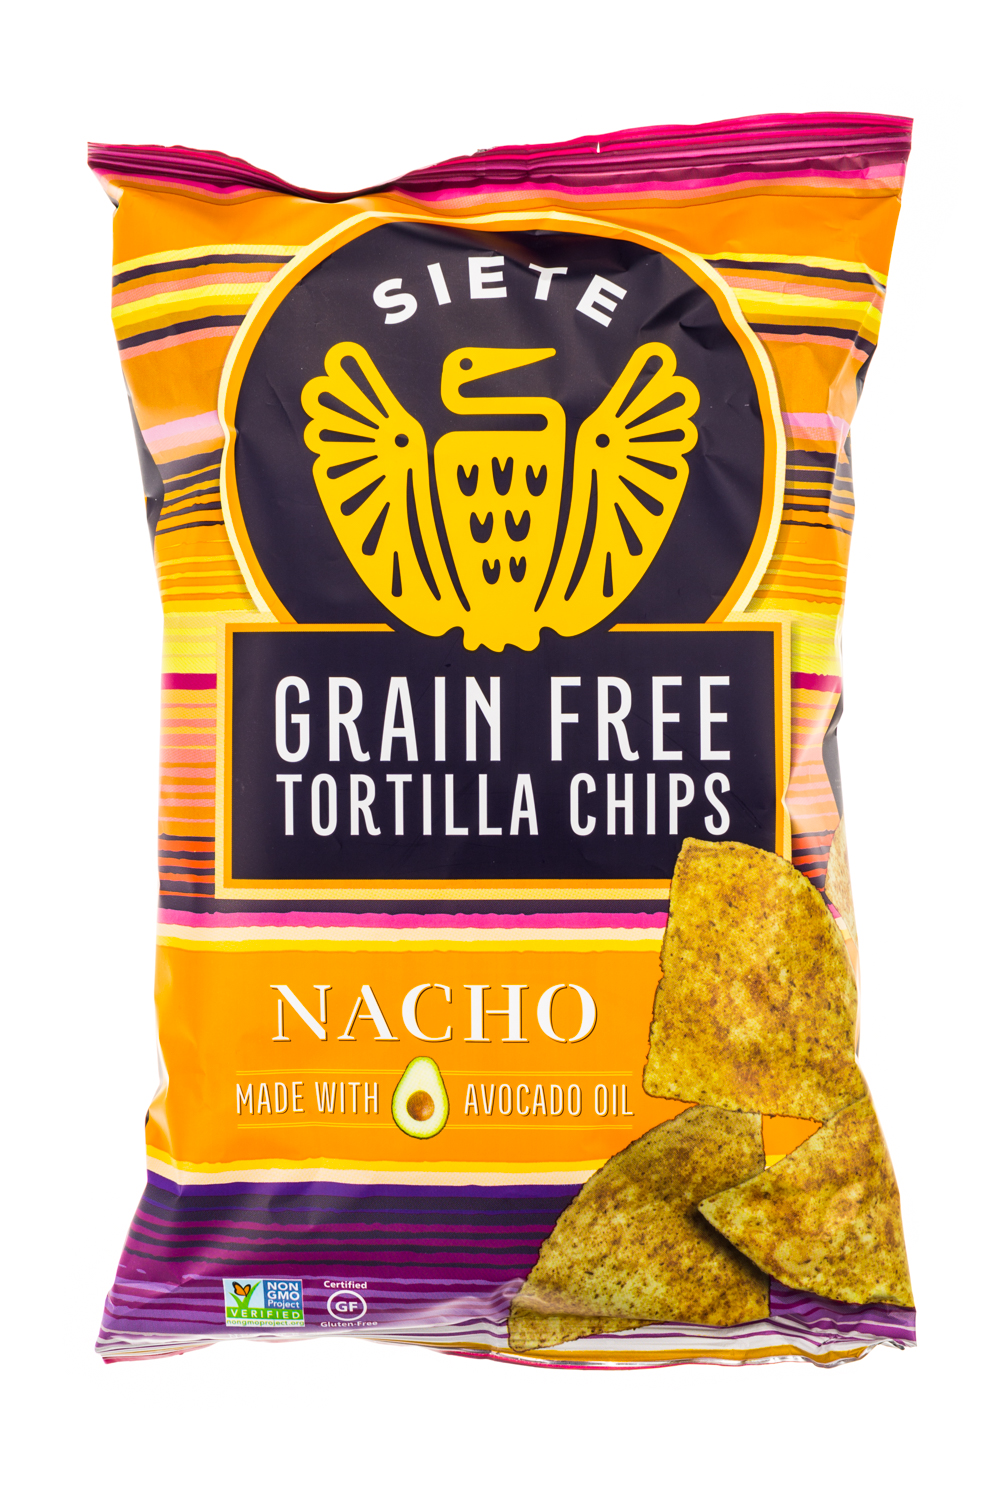 Nacho- Grain Free Tortilla Chips